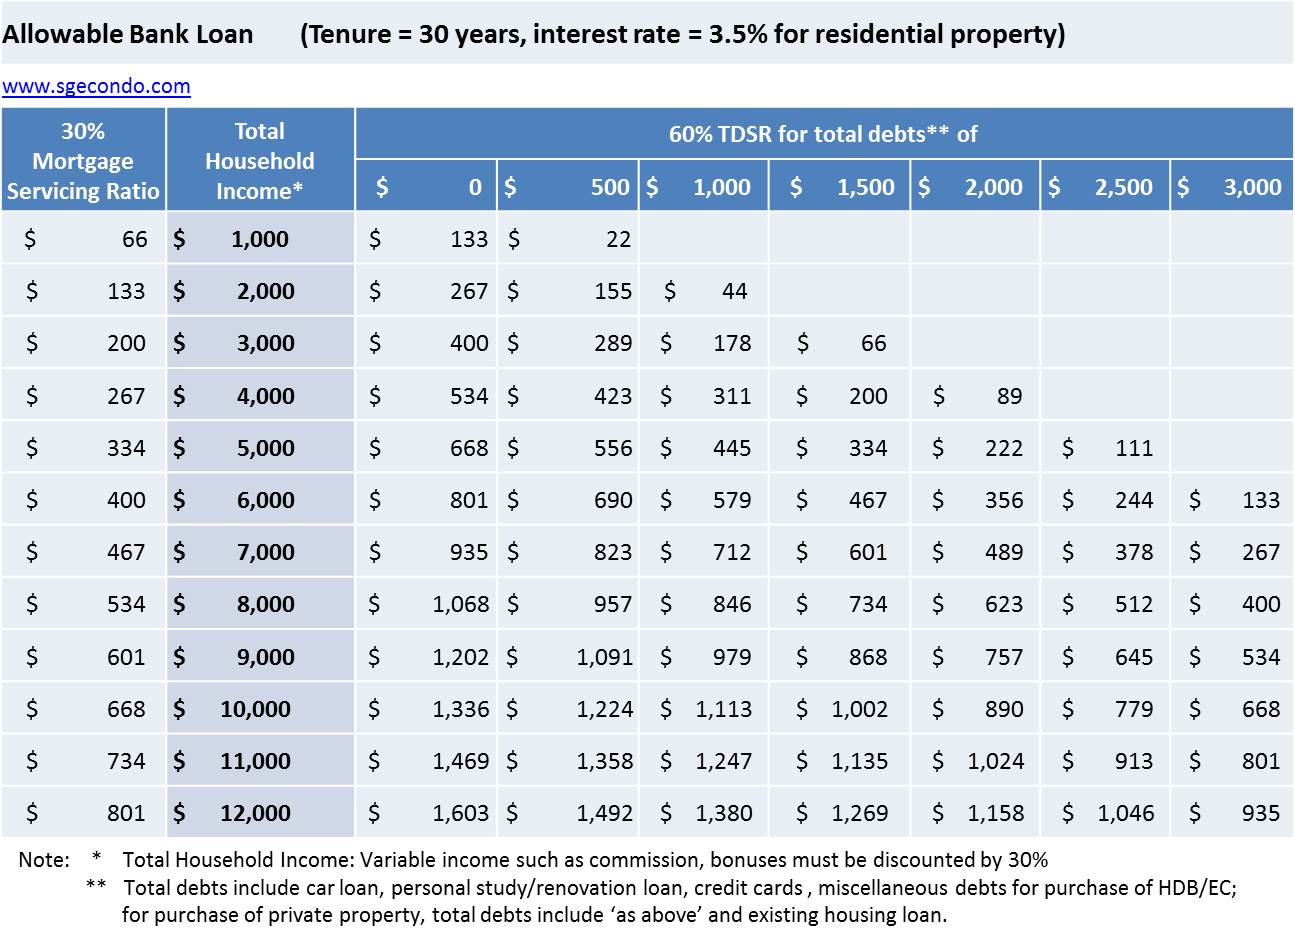 Allowable Bank Loan